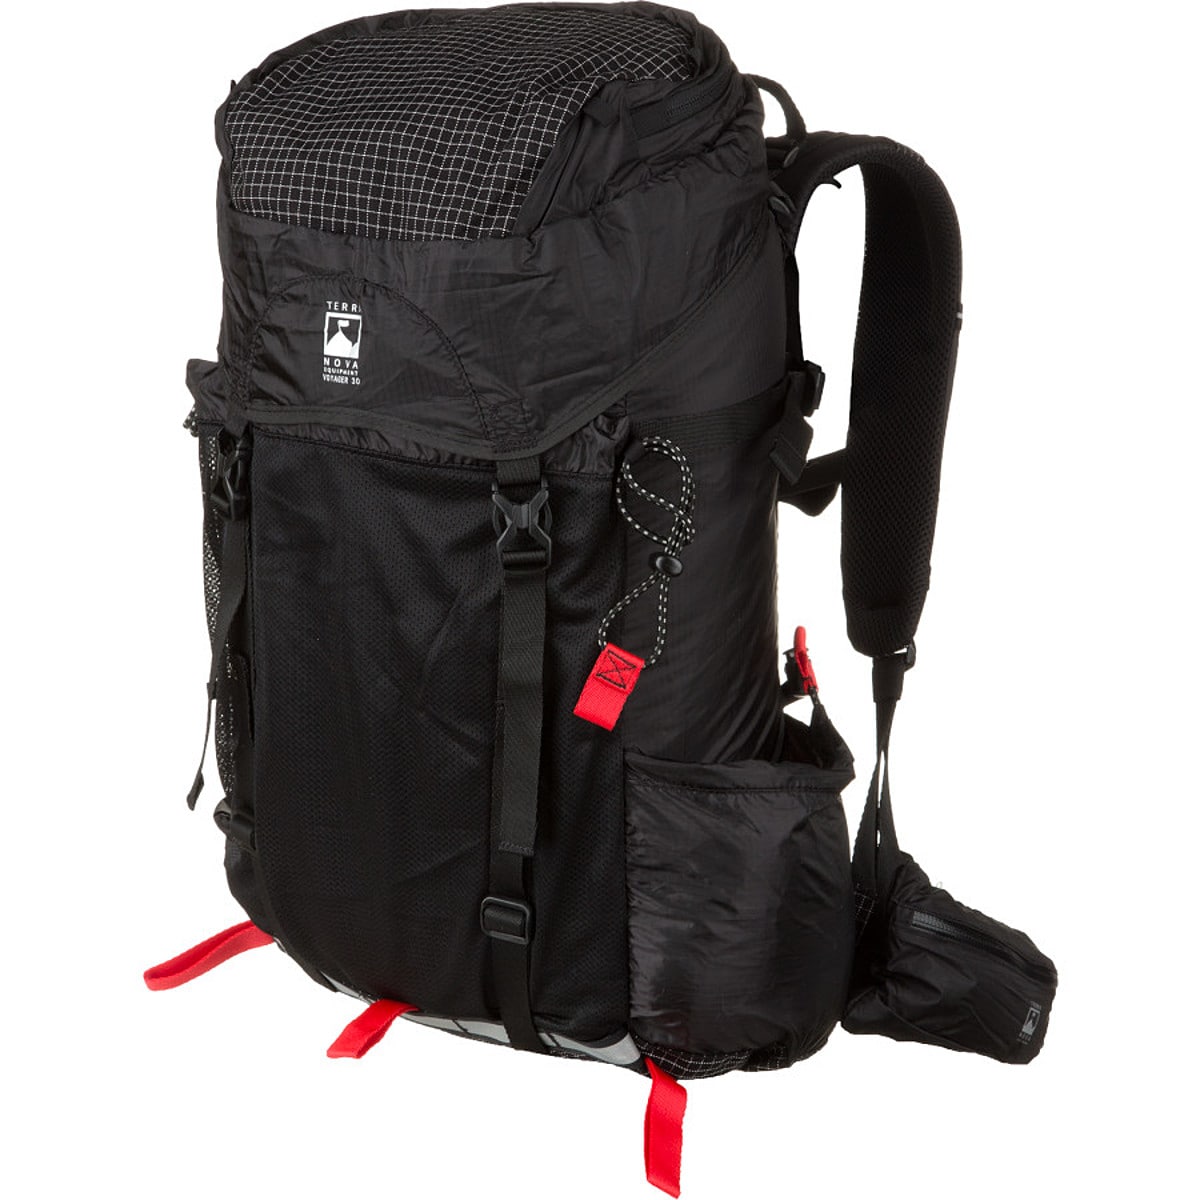 Terra Nova Voyager 30 Backpack - 1831cu in - Hike & Camp